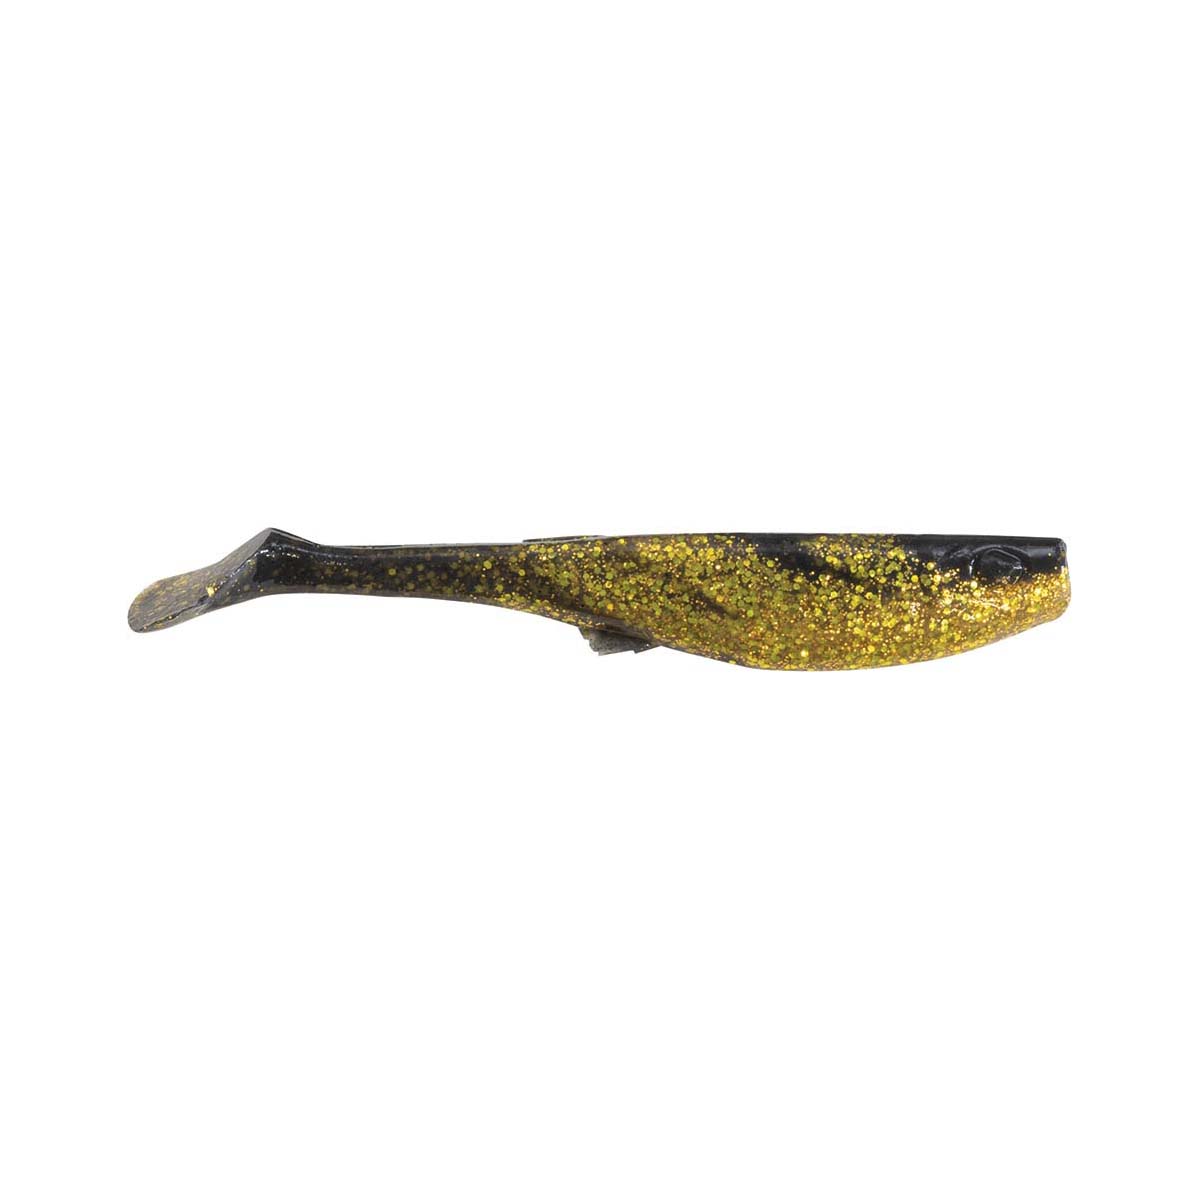 Berkley Gulp! Paddletail Shad Soft Plastic Lure 5in Black / Gold